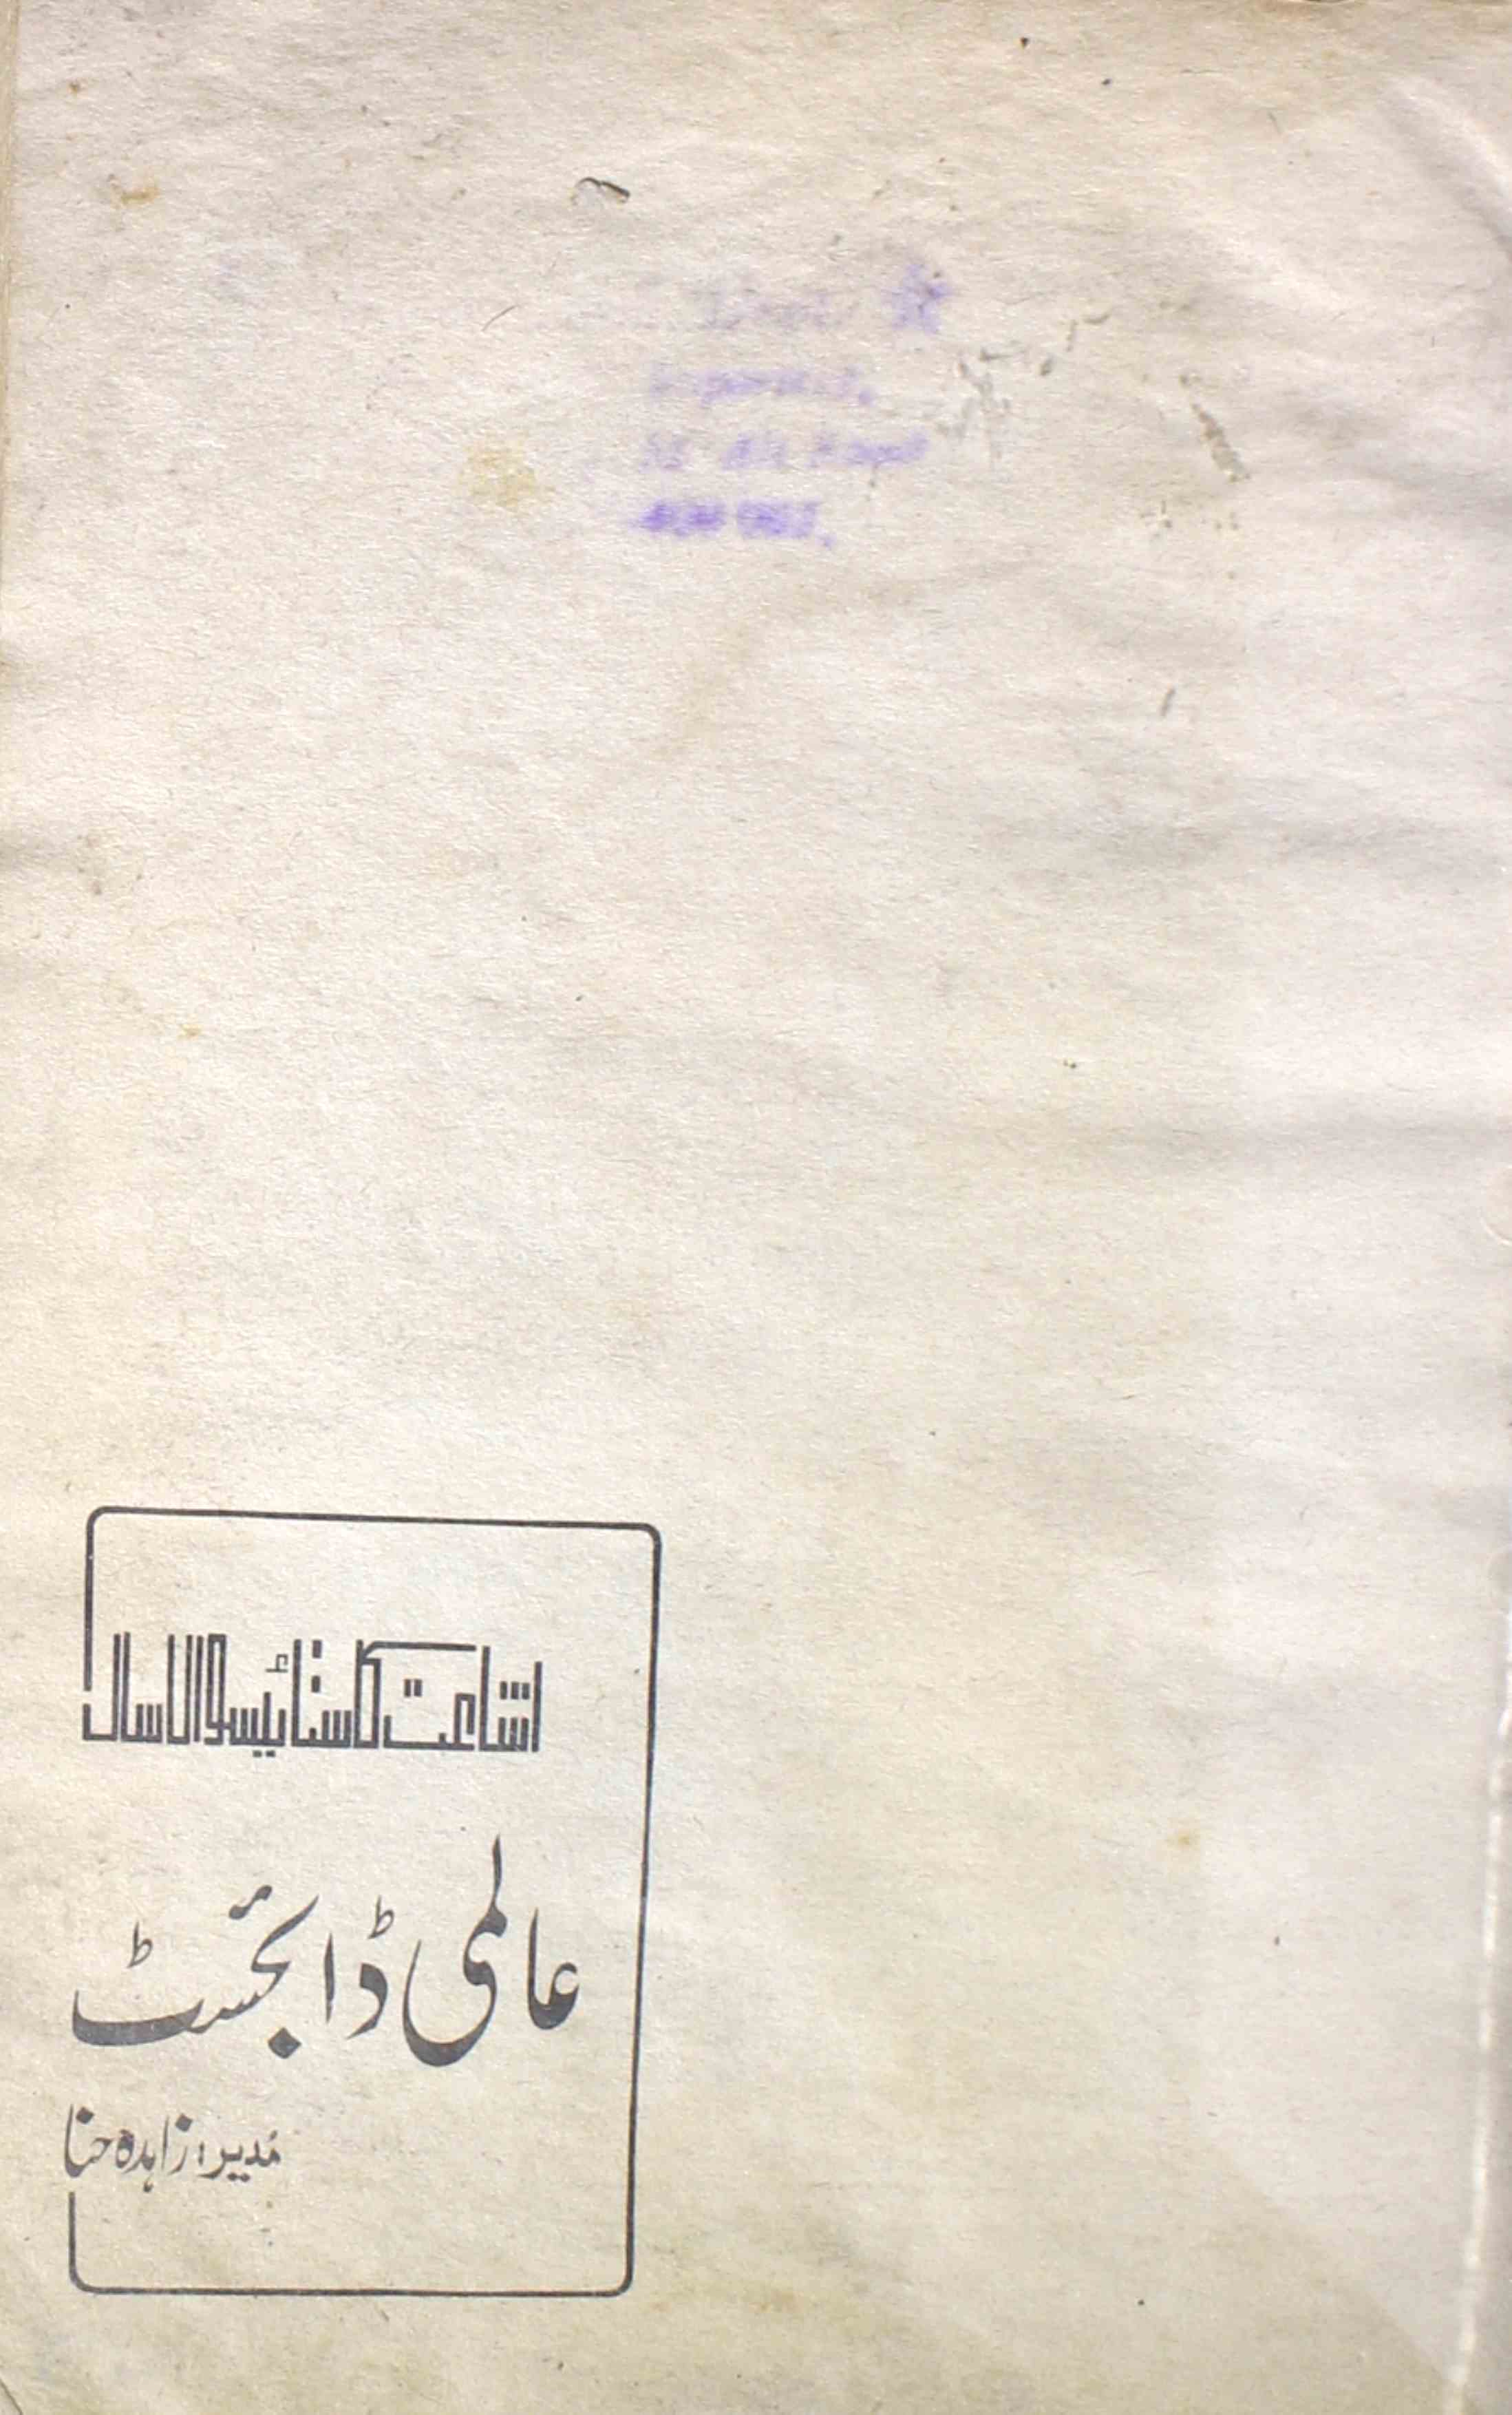 Aalimi Diagest Aug 1983 SVK-Shumara Number-008